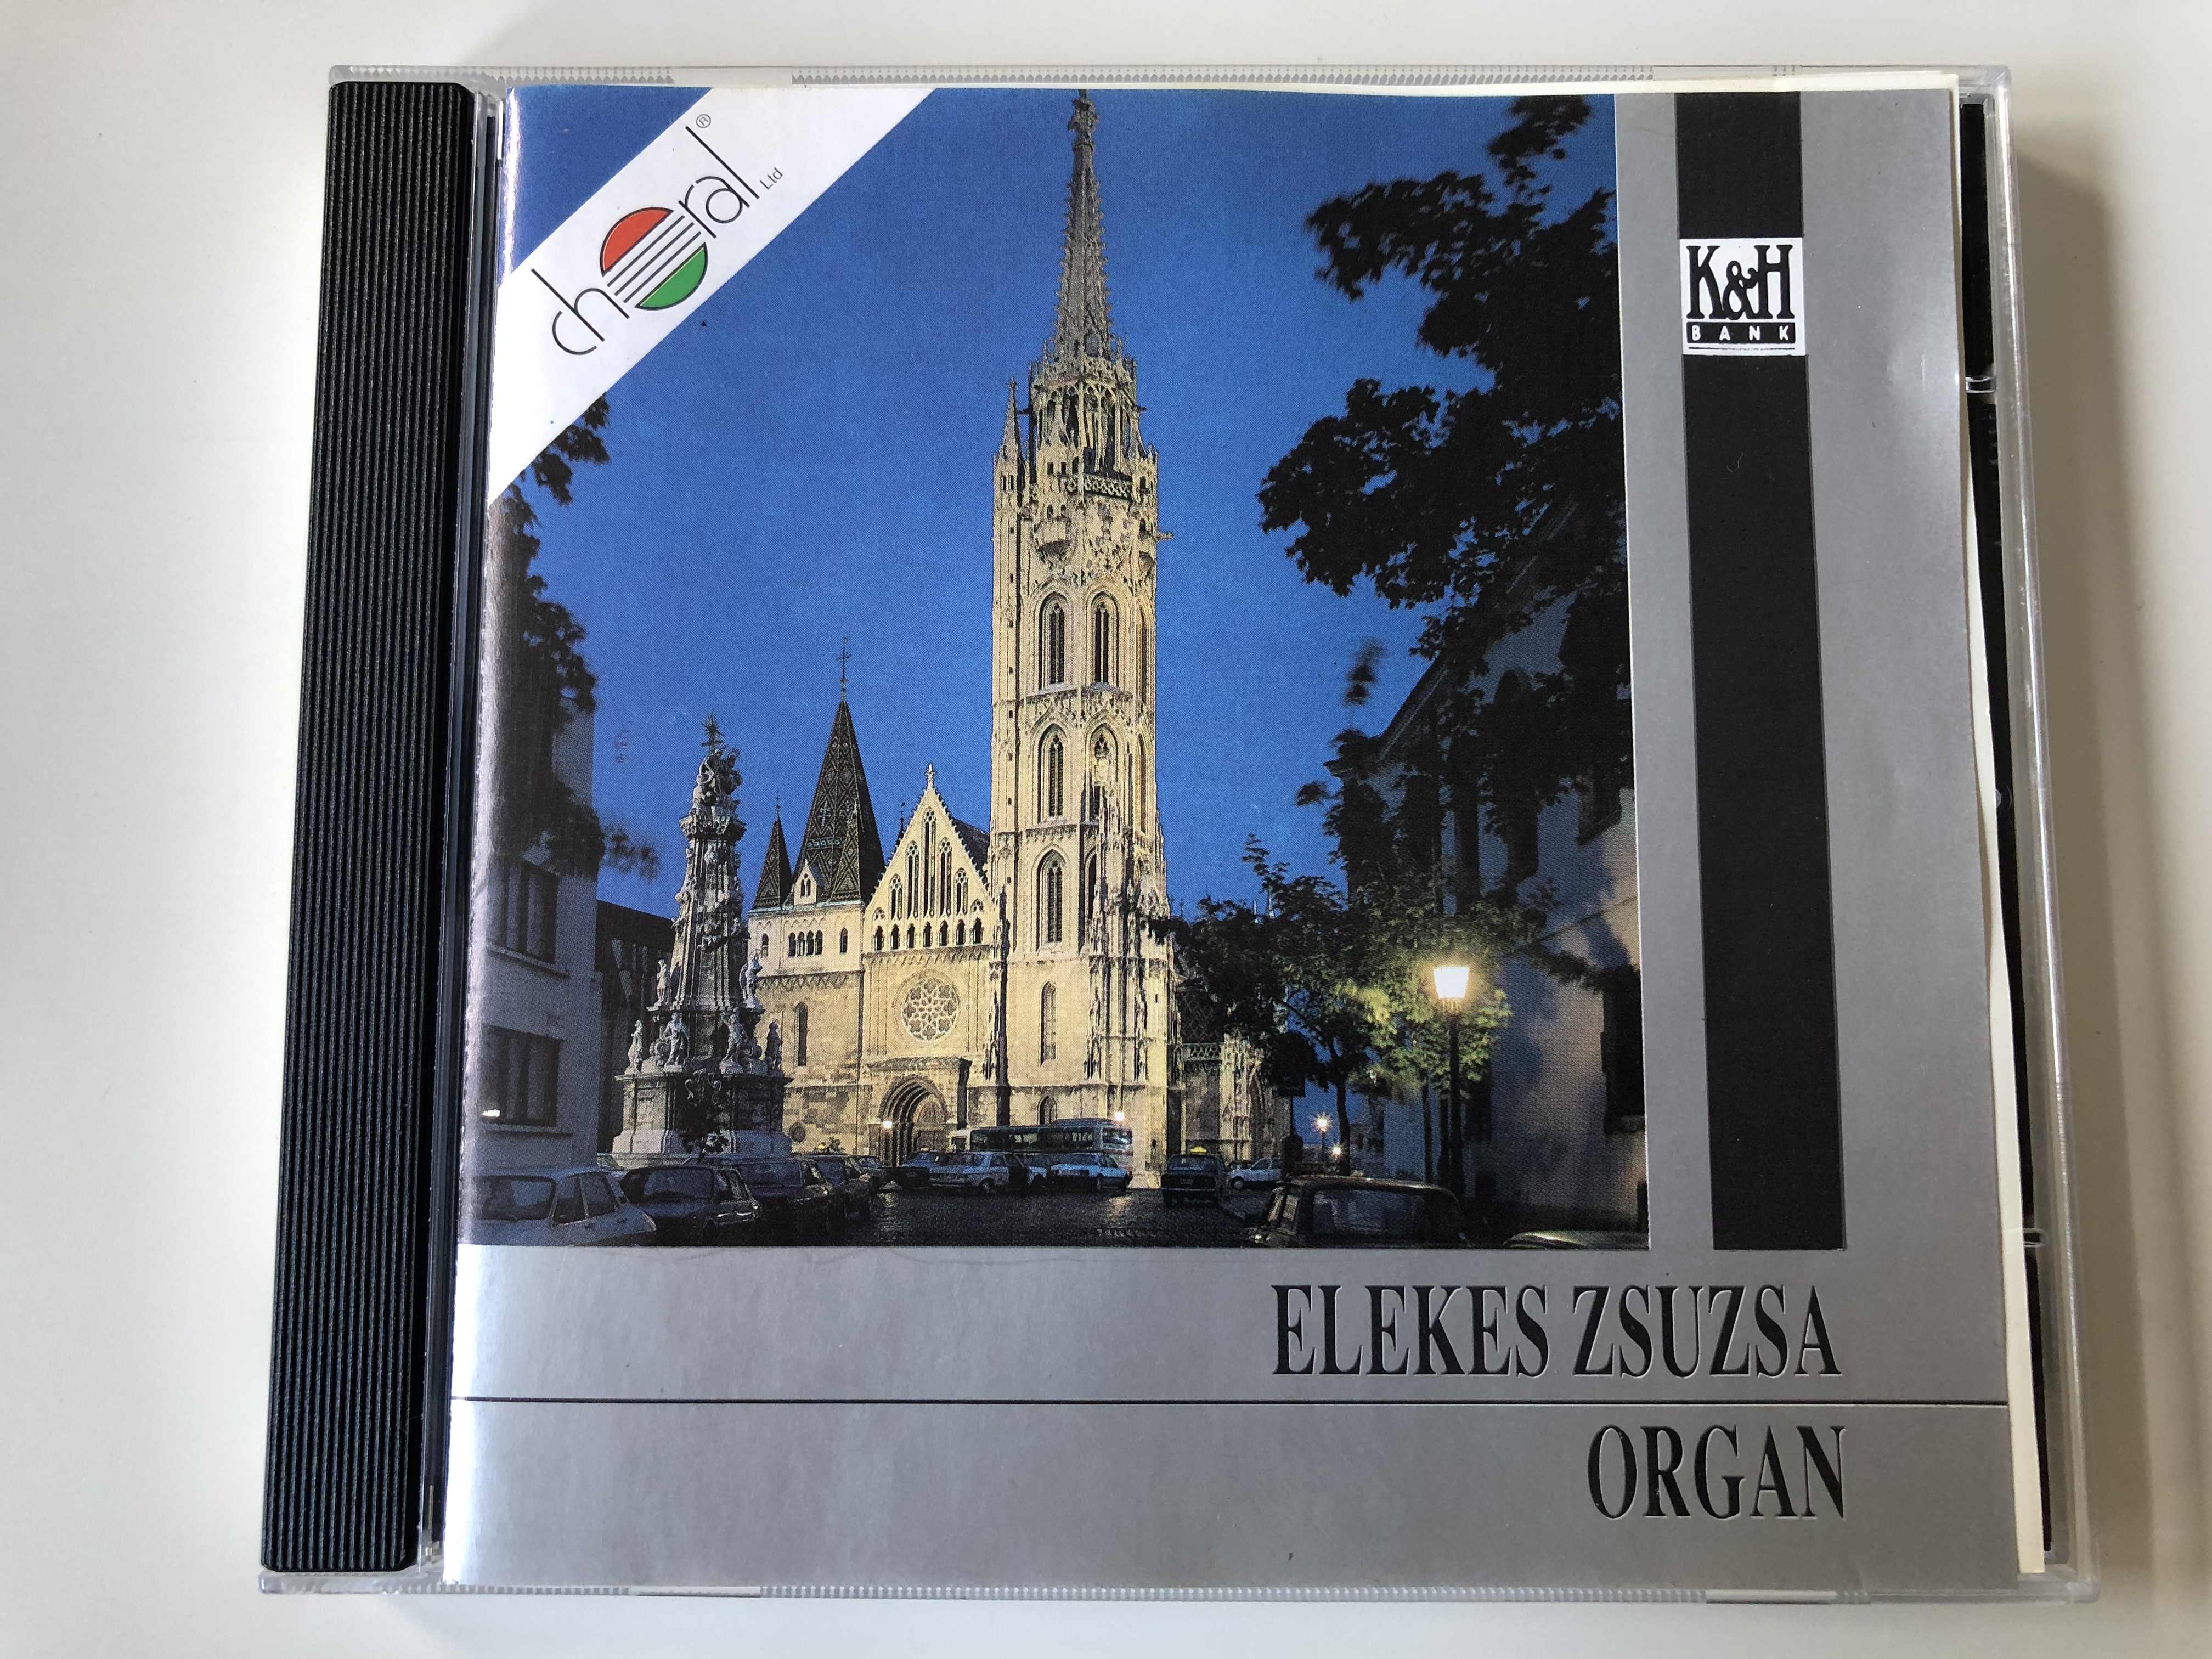 elekes-zsuzsa-organ-choral-audio-cd-1991-chcd-010-1-.jpg